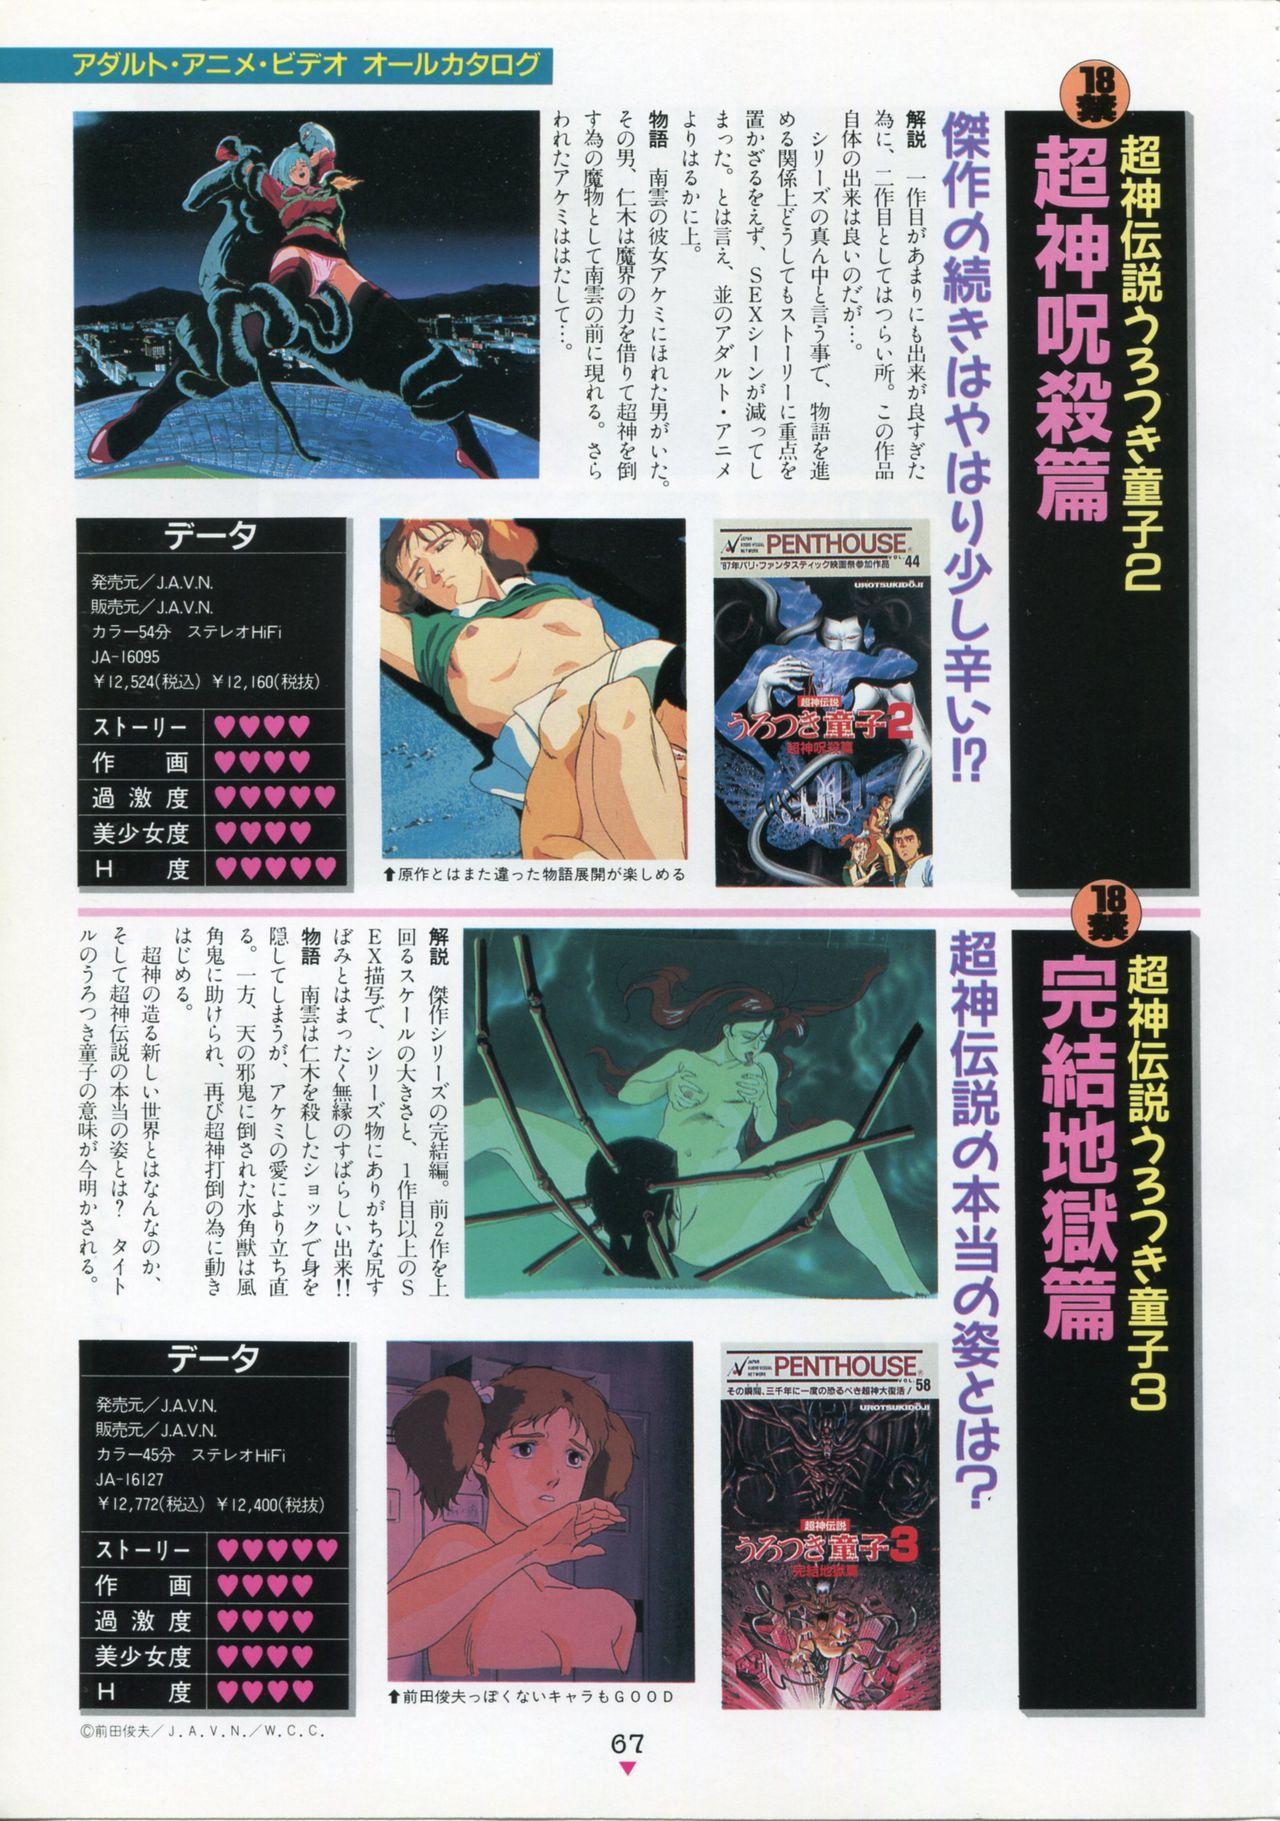 Bishoujo Anime Daizenshuu - Adult Animation Video Catalog 1991 62